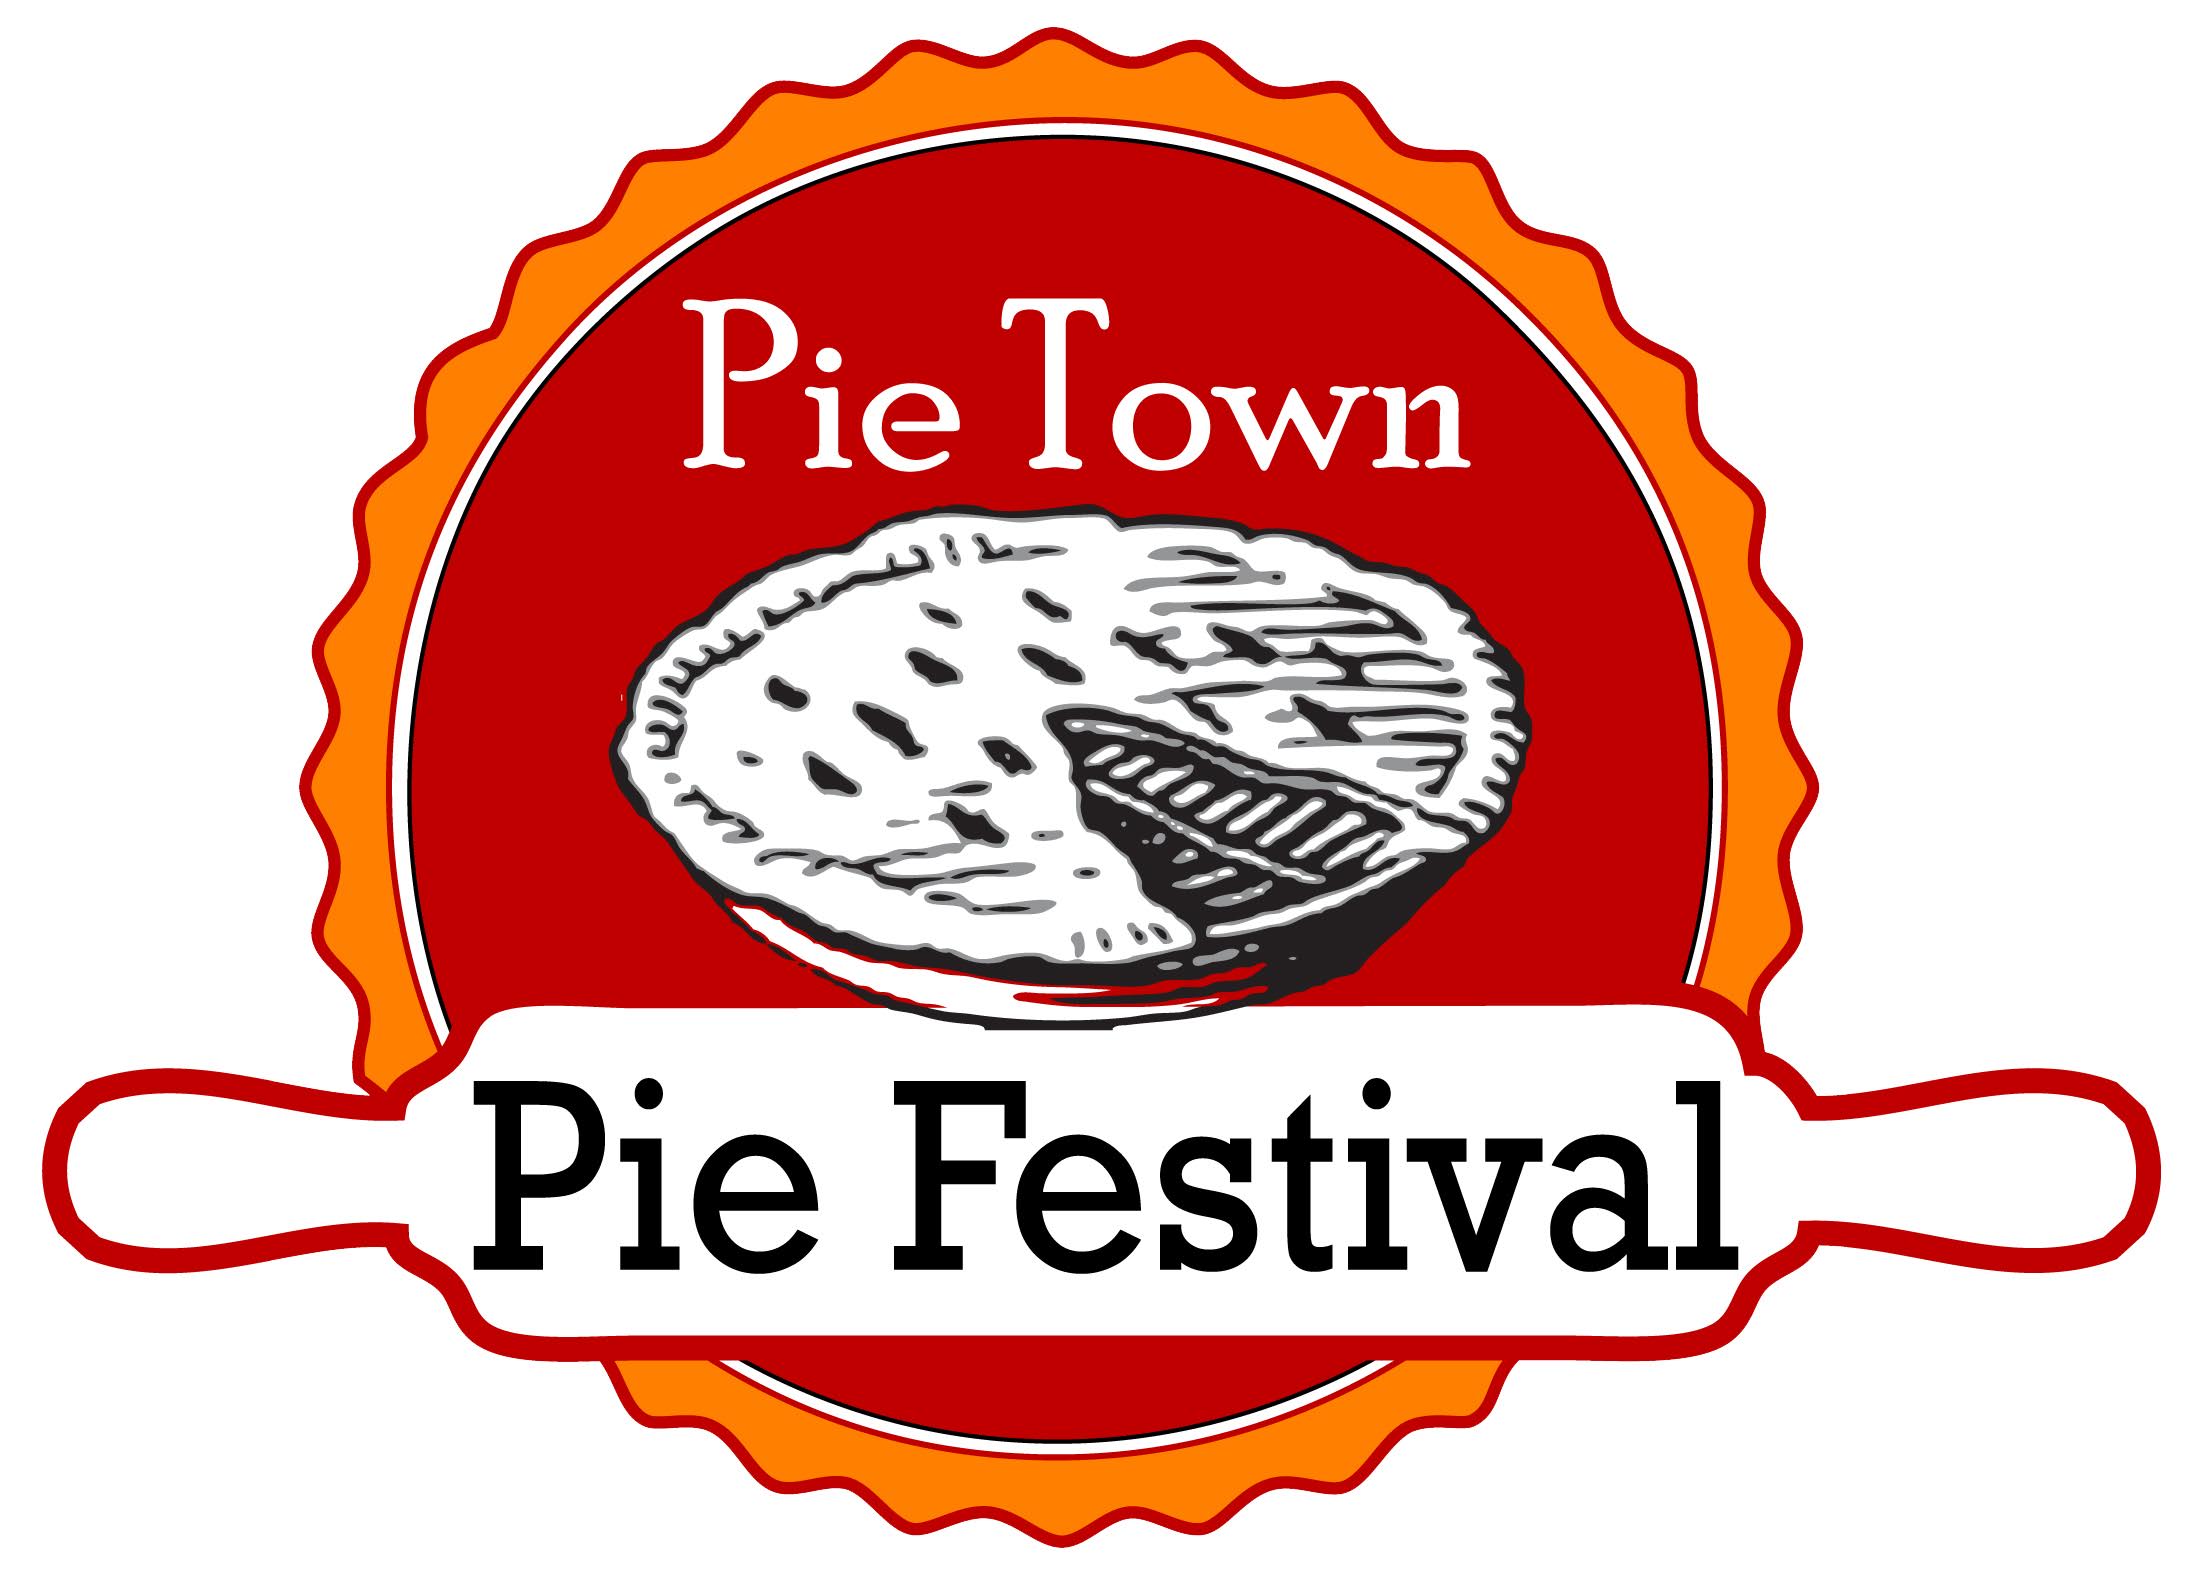 Pie Town Pie Festival The Pie Town Slice